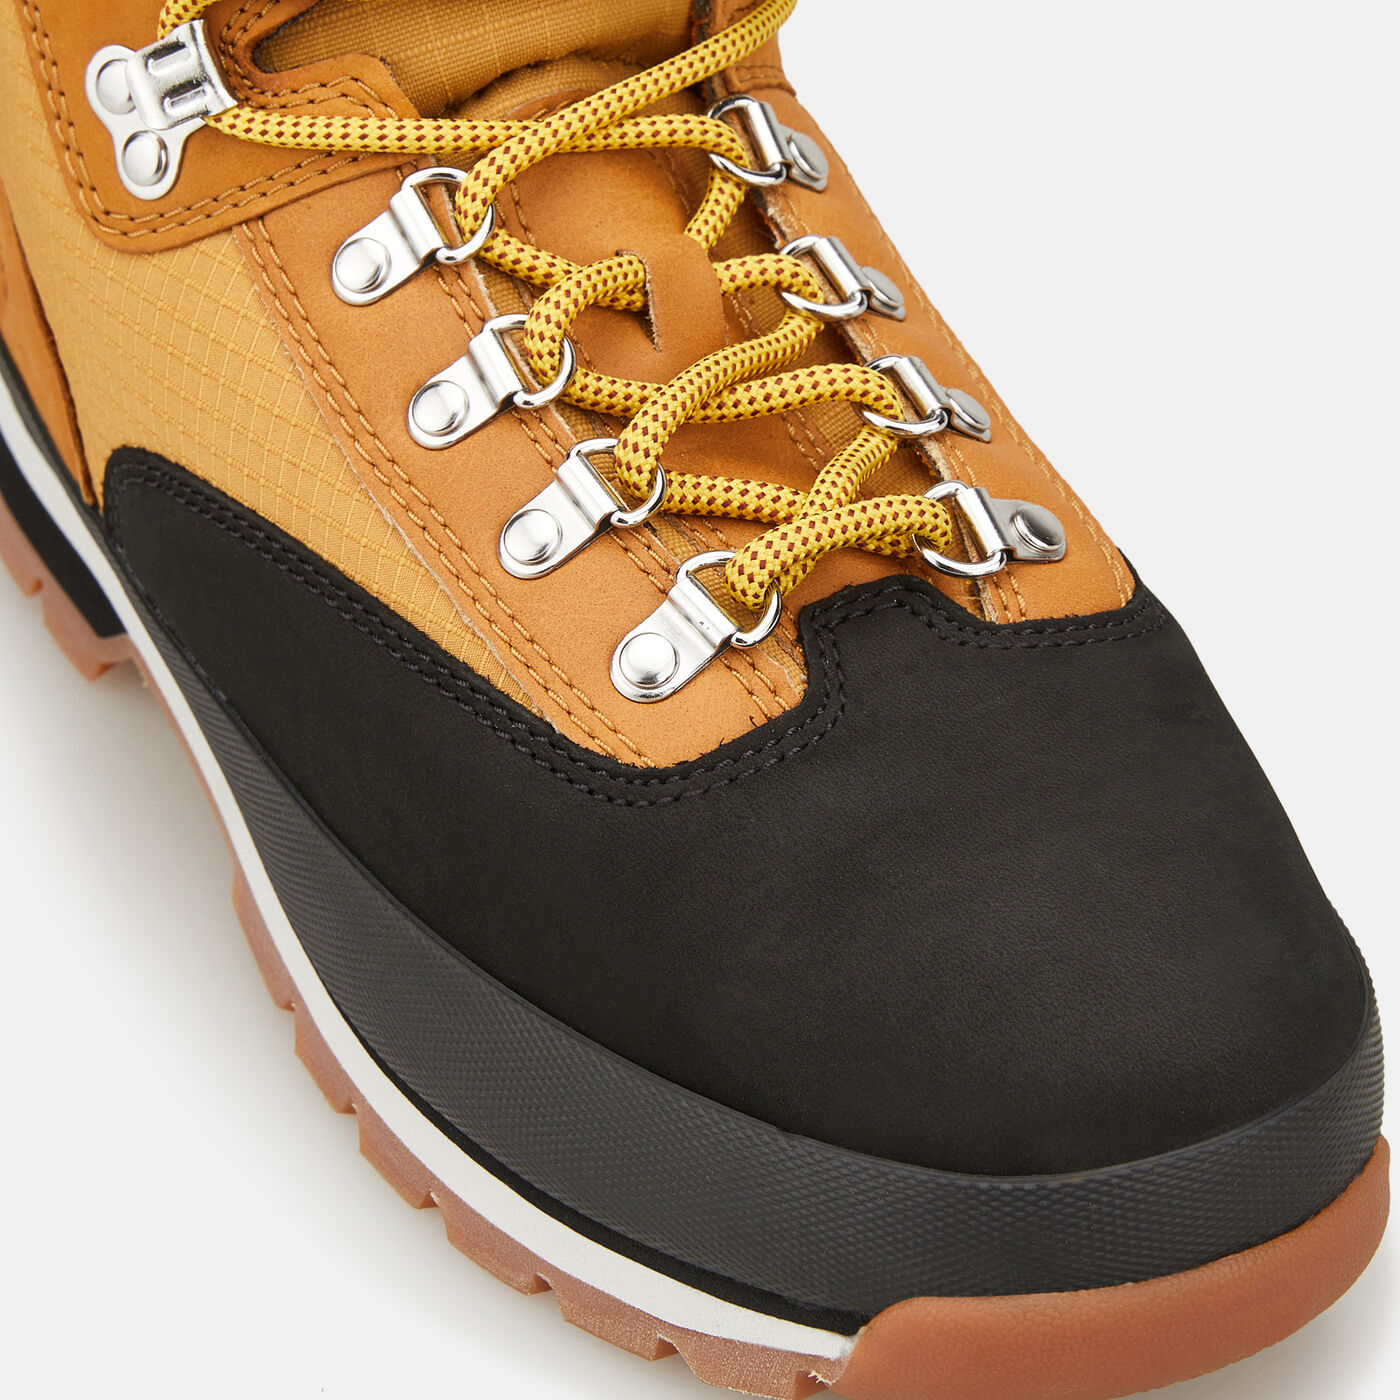 Men's Euro Hiker Shoe